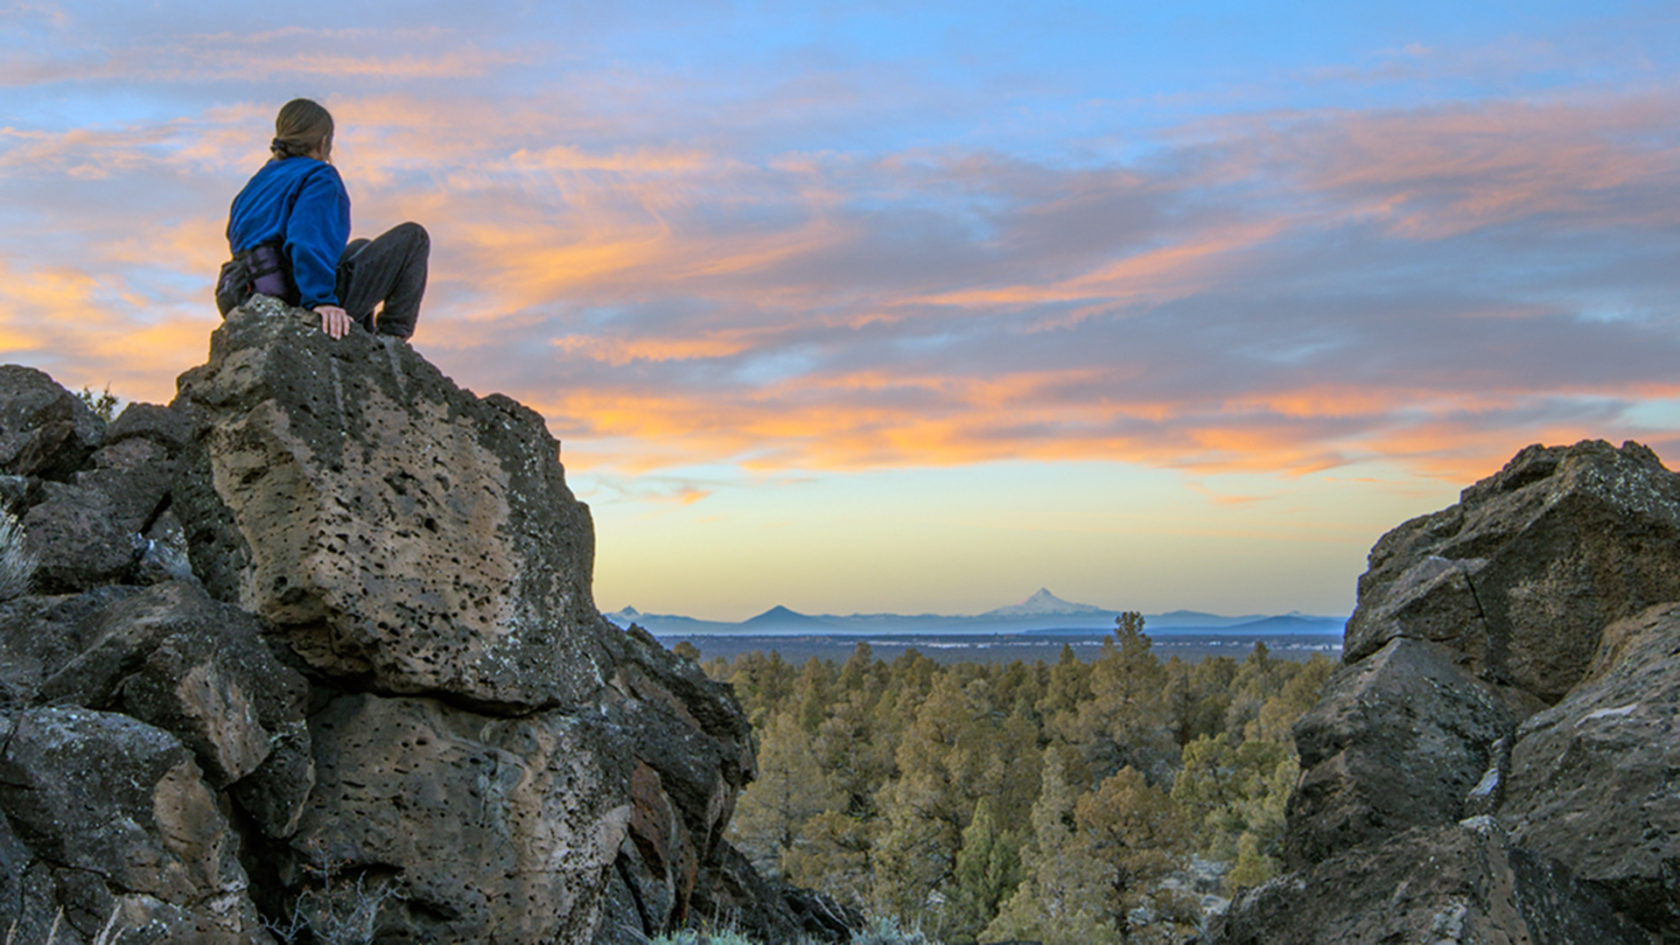 A hiker admires sunset in the Badlands Wilderness